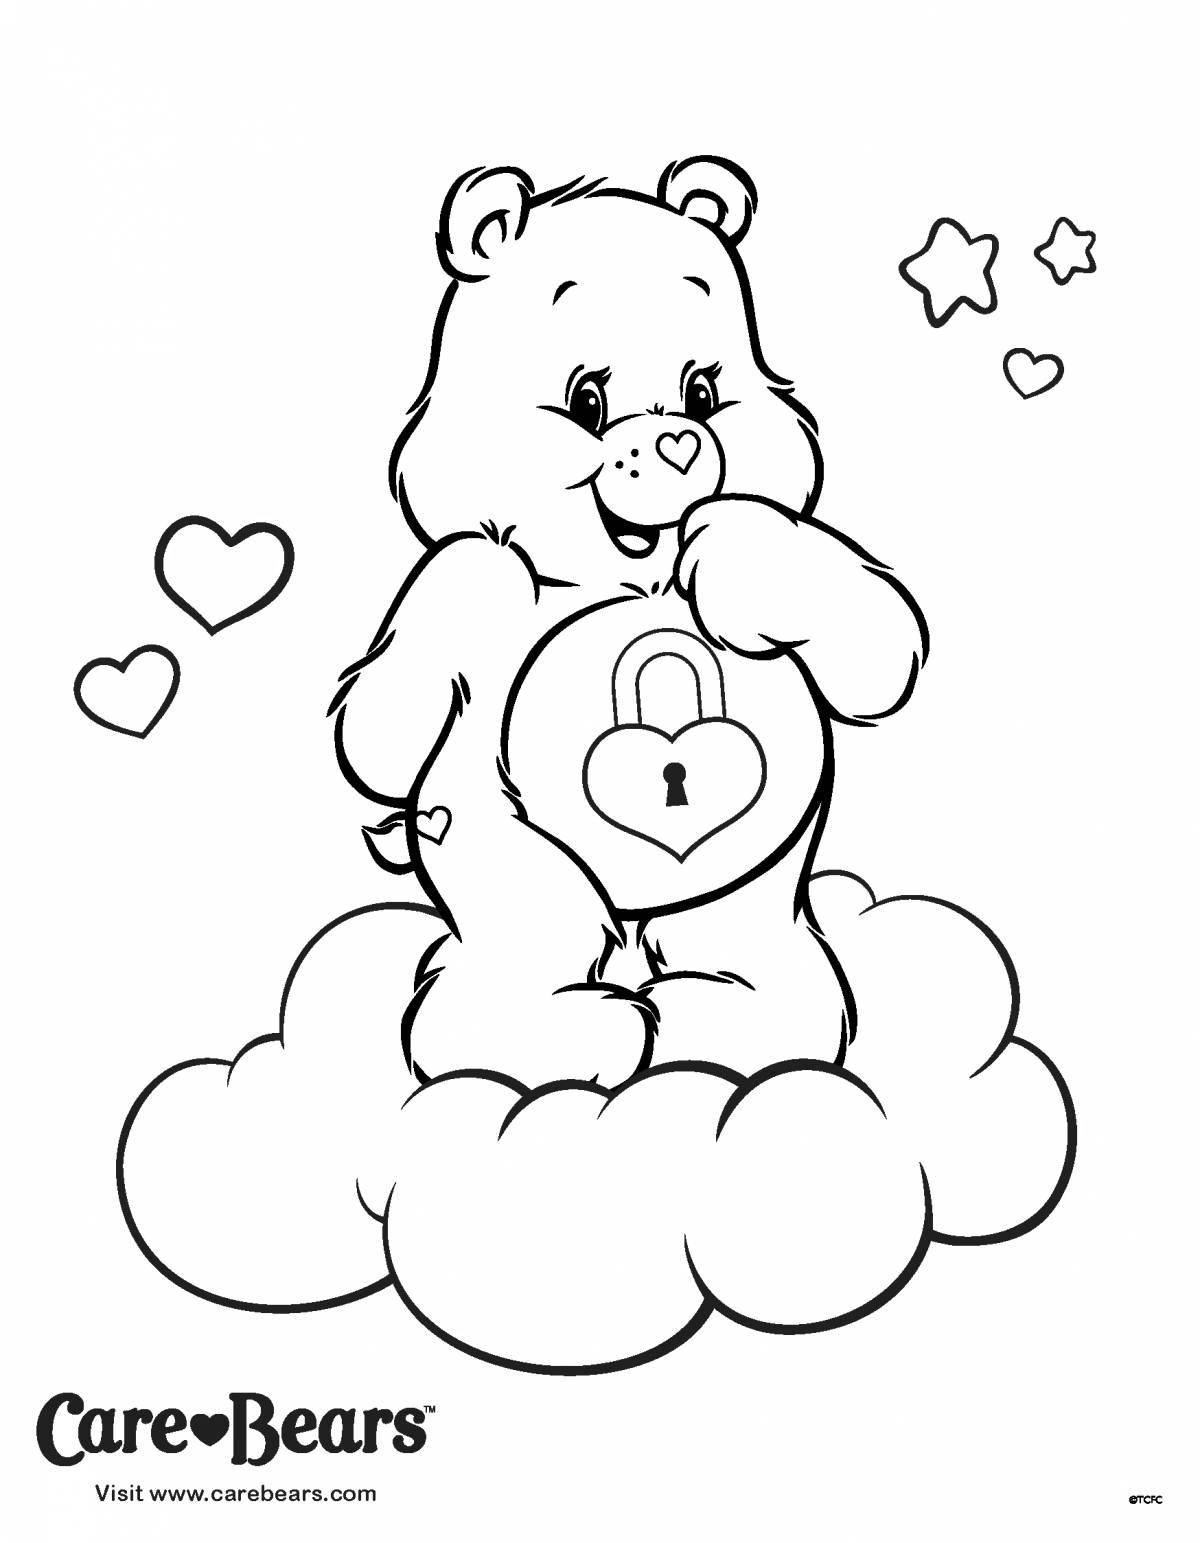 Dazzling bear with heart pattern